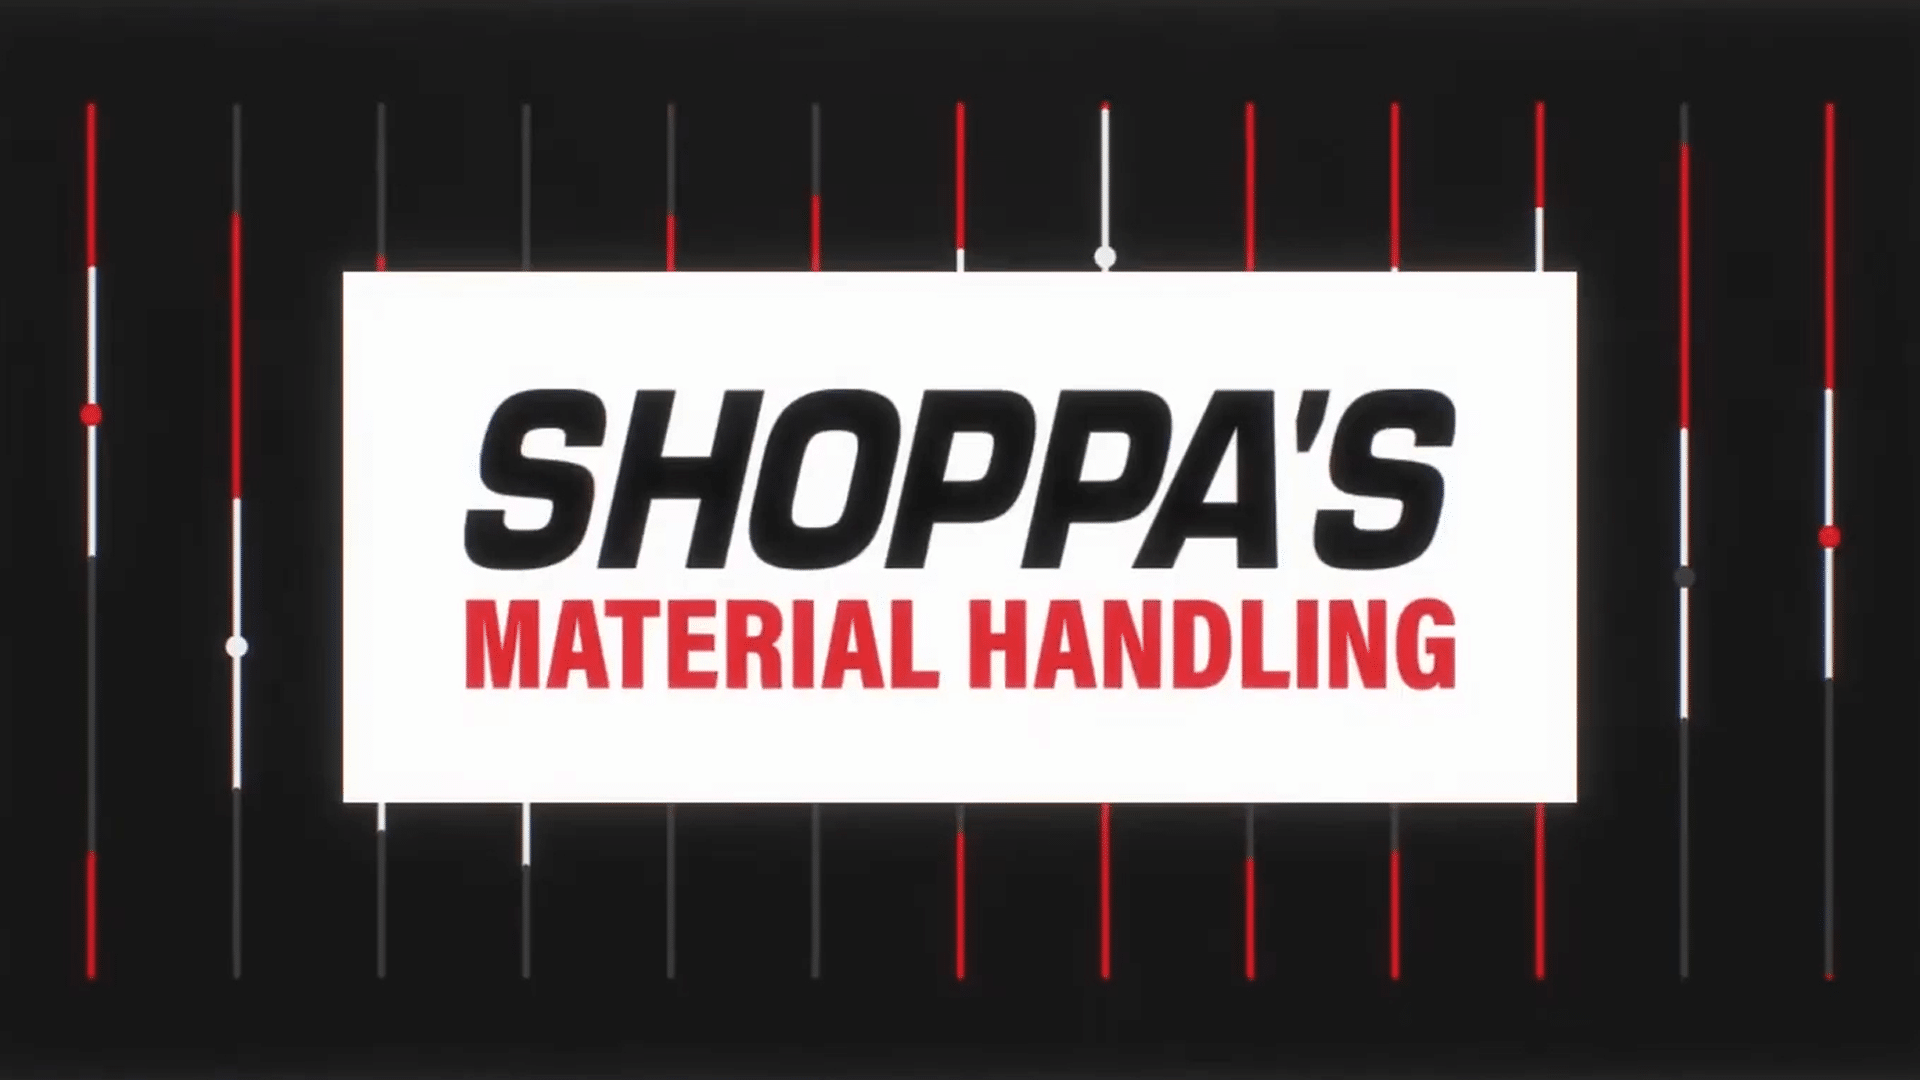 Shoppa's Video Thumbnail